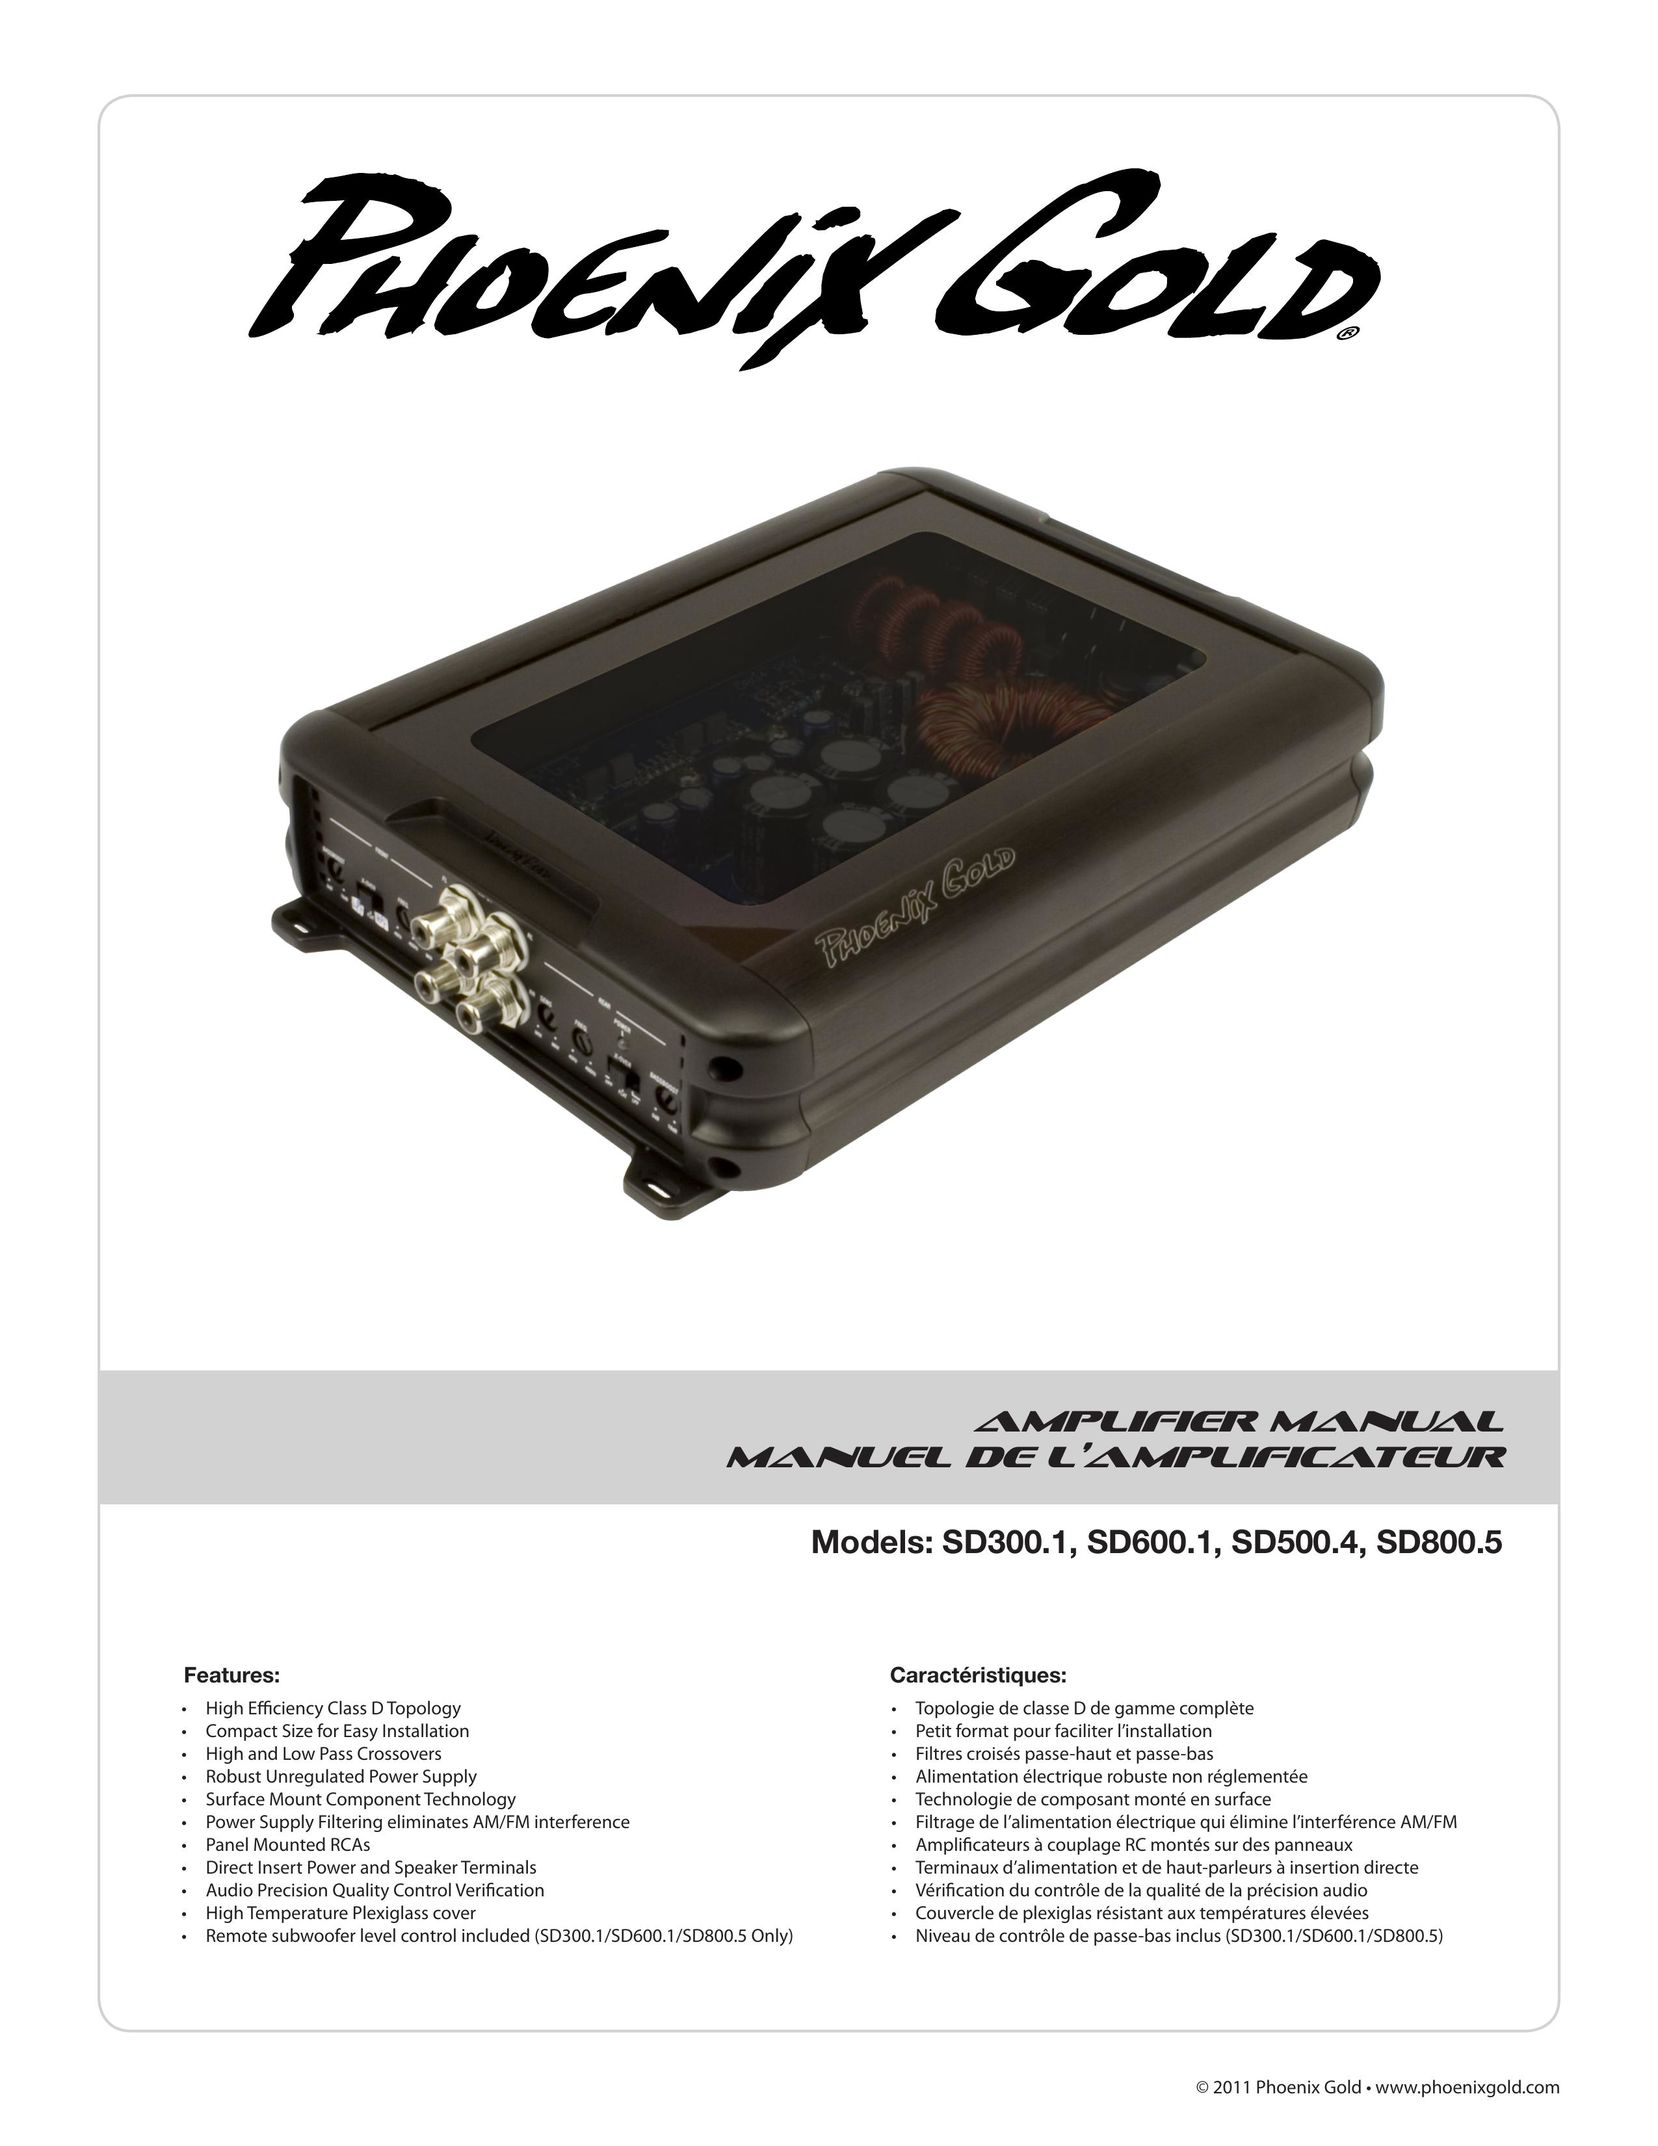 Phoenix Gold SD500.4 Car Amplifier User Manual